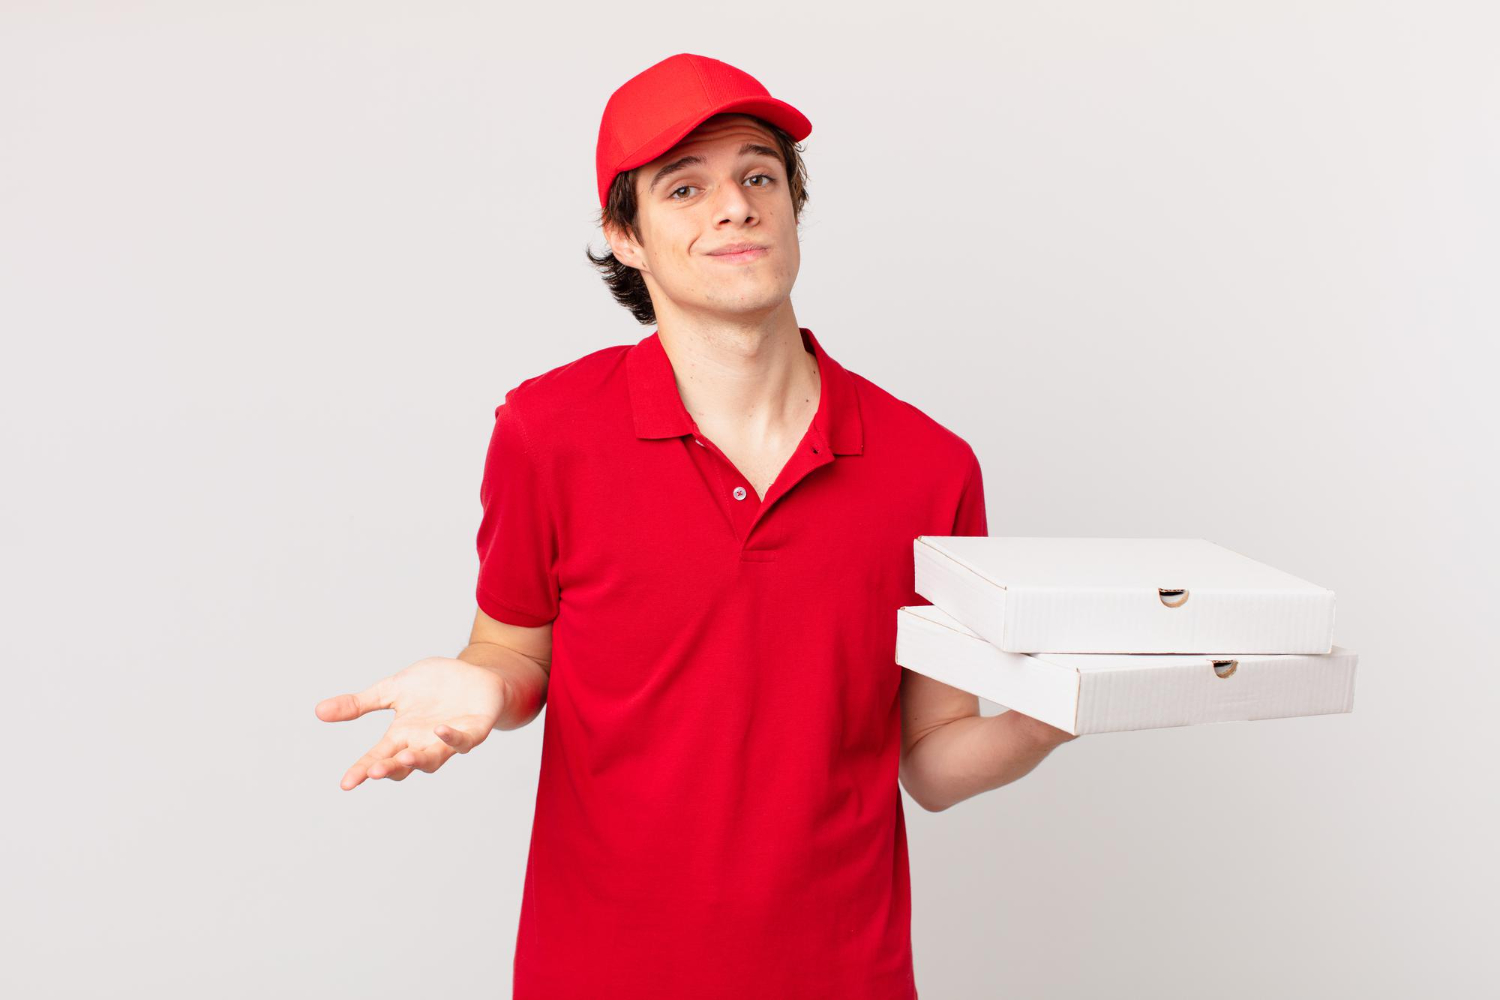 pizza deliver man shrugging feeling confused uncertain